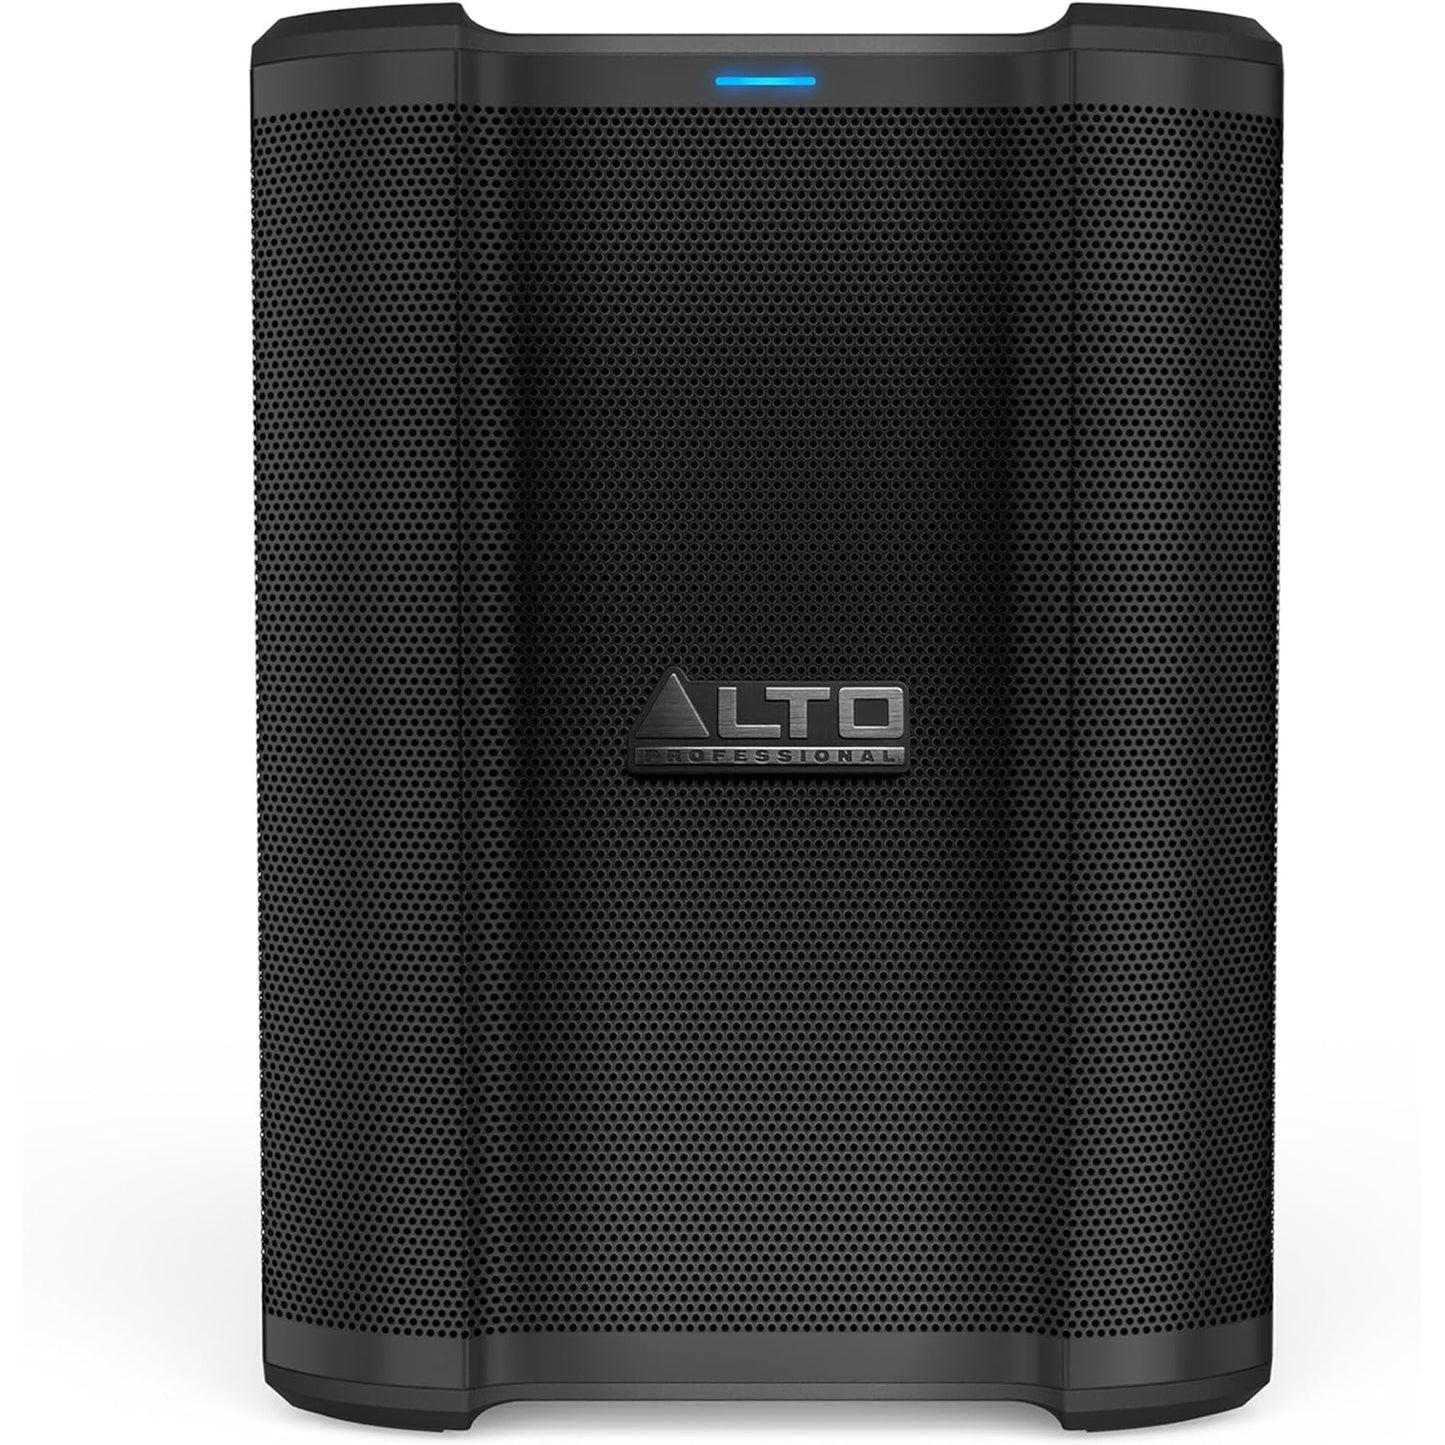 Alto Professional Busker Premium Battery Powered Portable PA